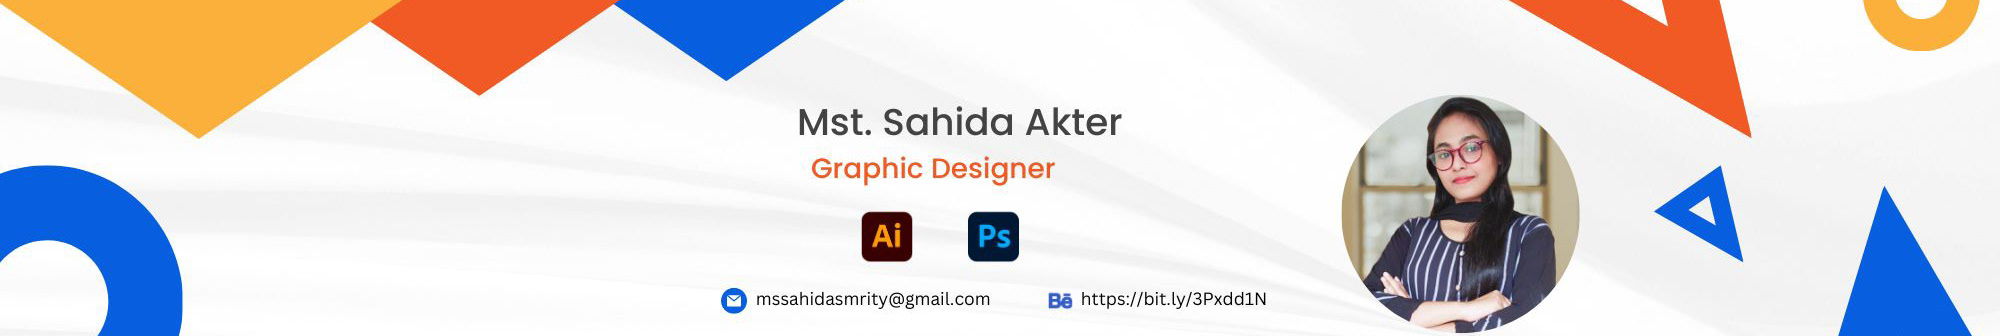 Banner de perfil de Mst. Sahida Akter